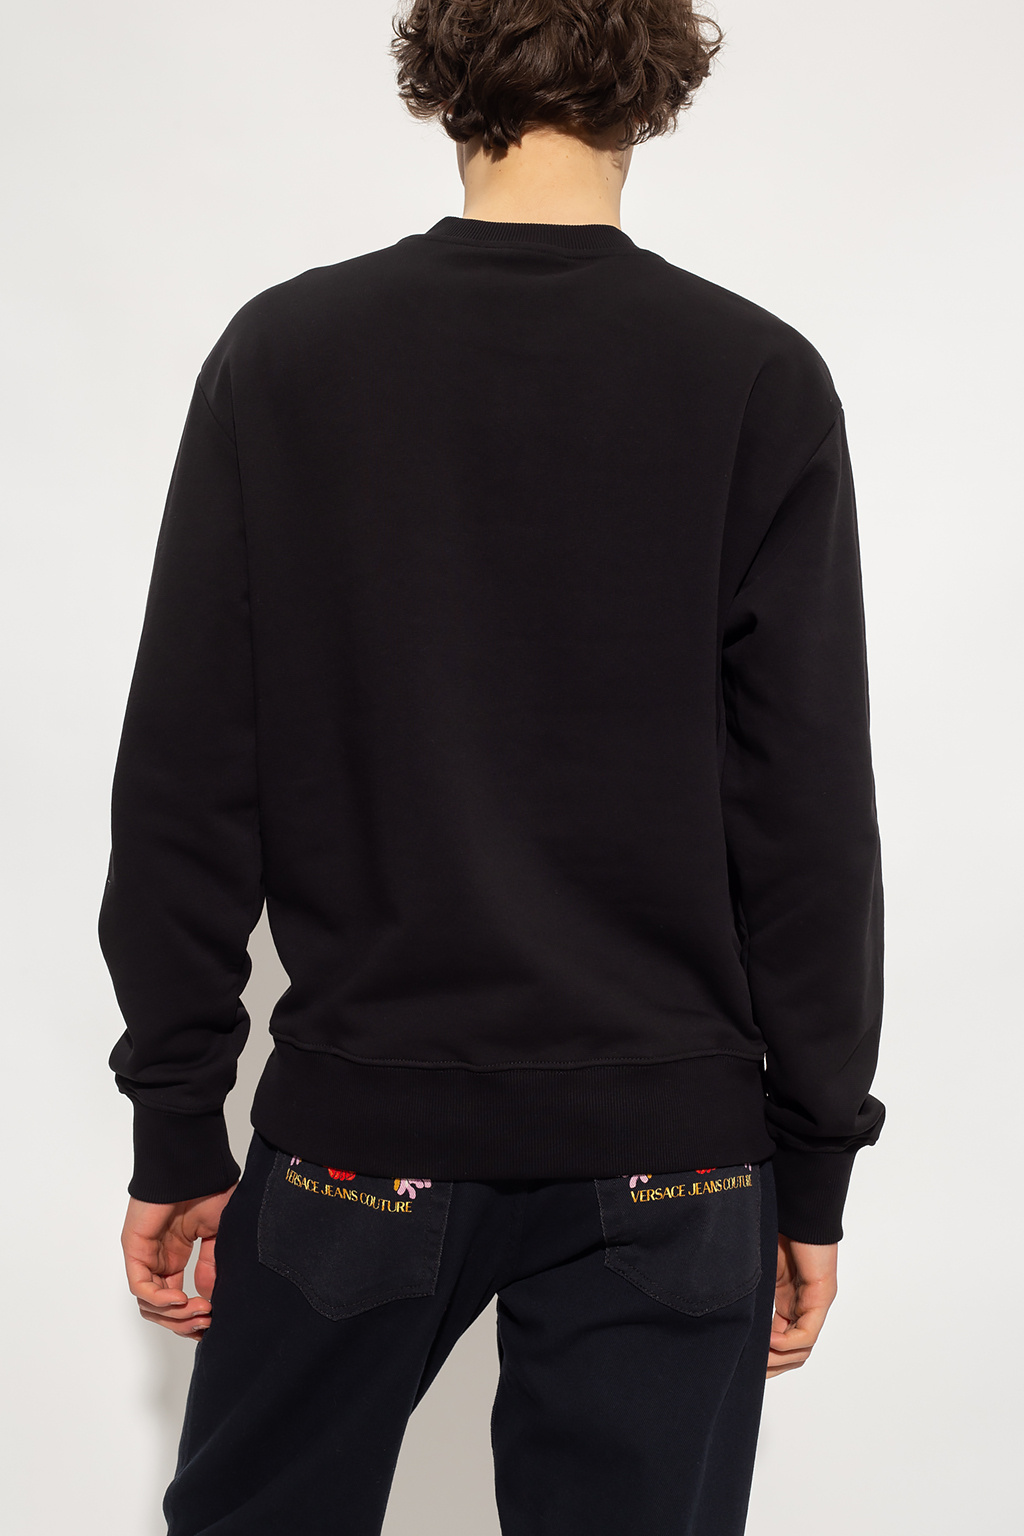 Versace Jeans Couture Sweatshirt with ‘Regalia Baroque’ print